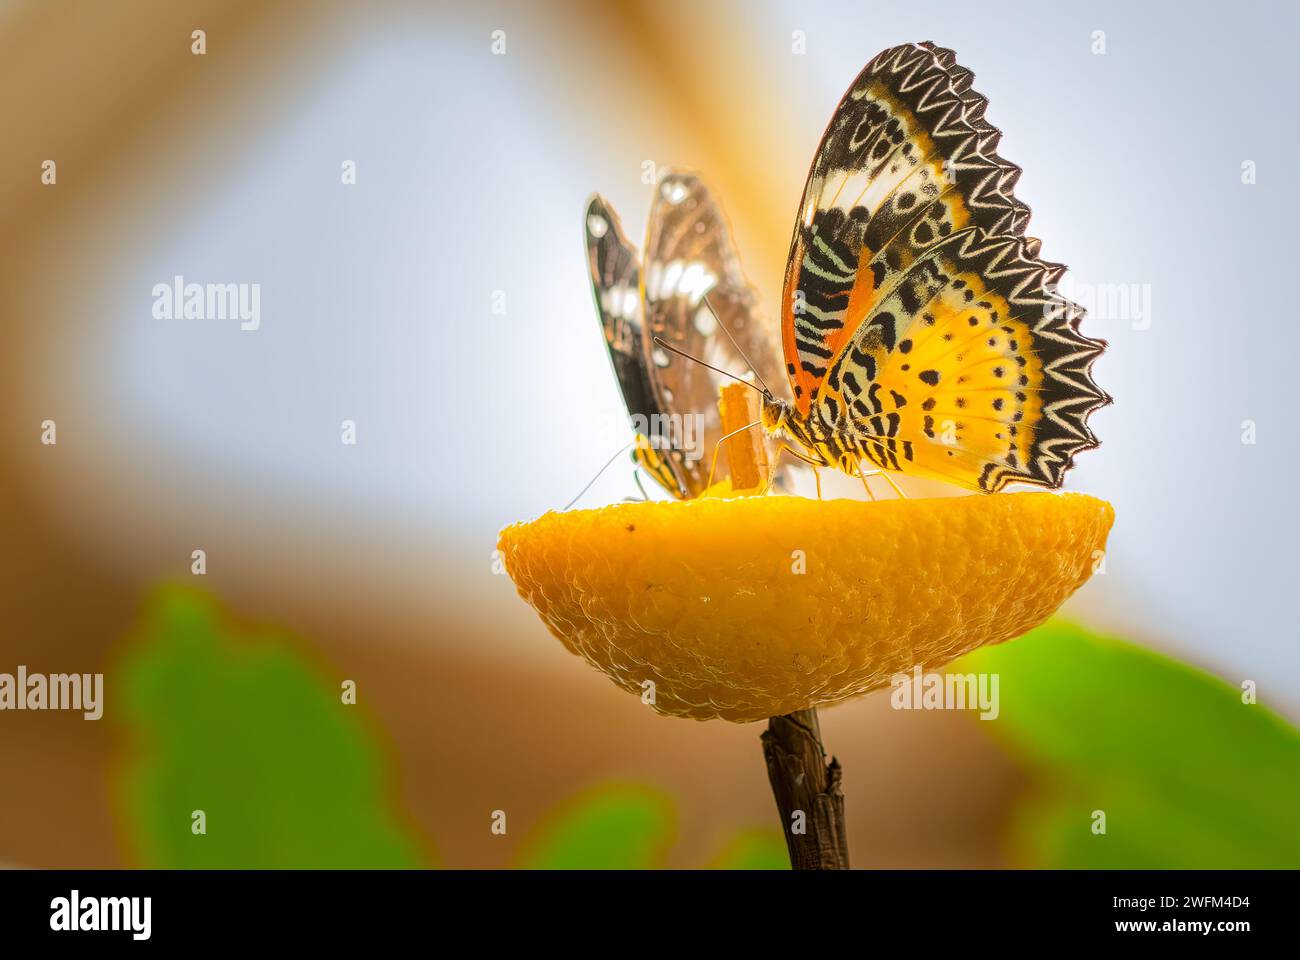 Dos mariposas leopardo (Cethosia cyane) alimentándose de jugo dulce de una rebanada de naranja. Alimentación de mariposa con jugo de naranja. Foto de stock